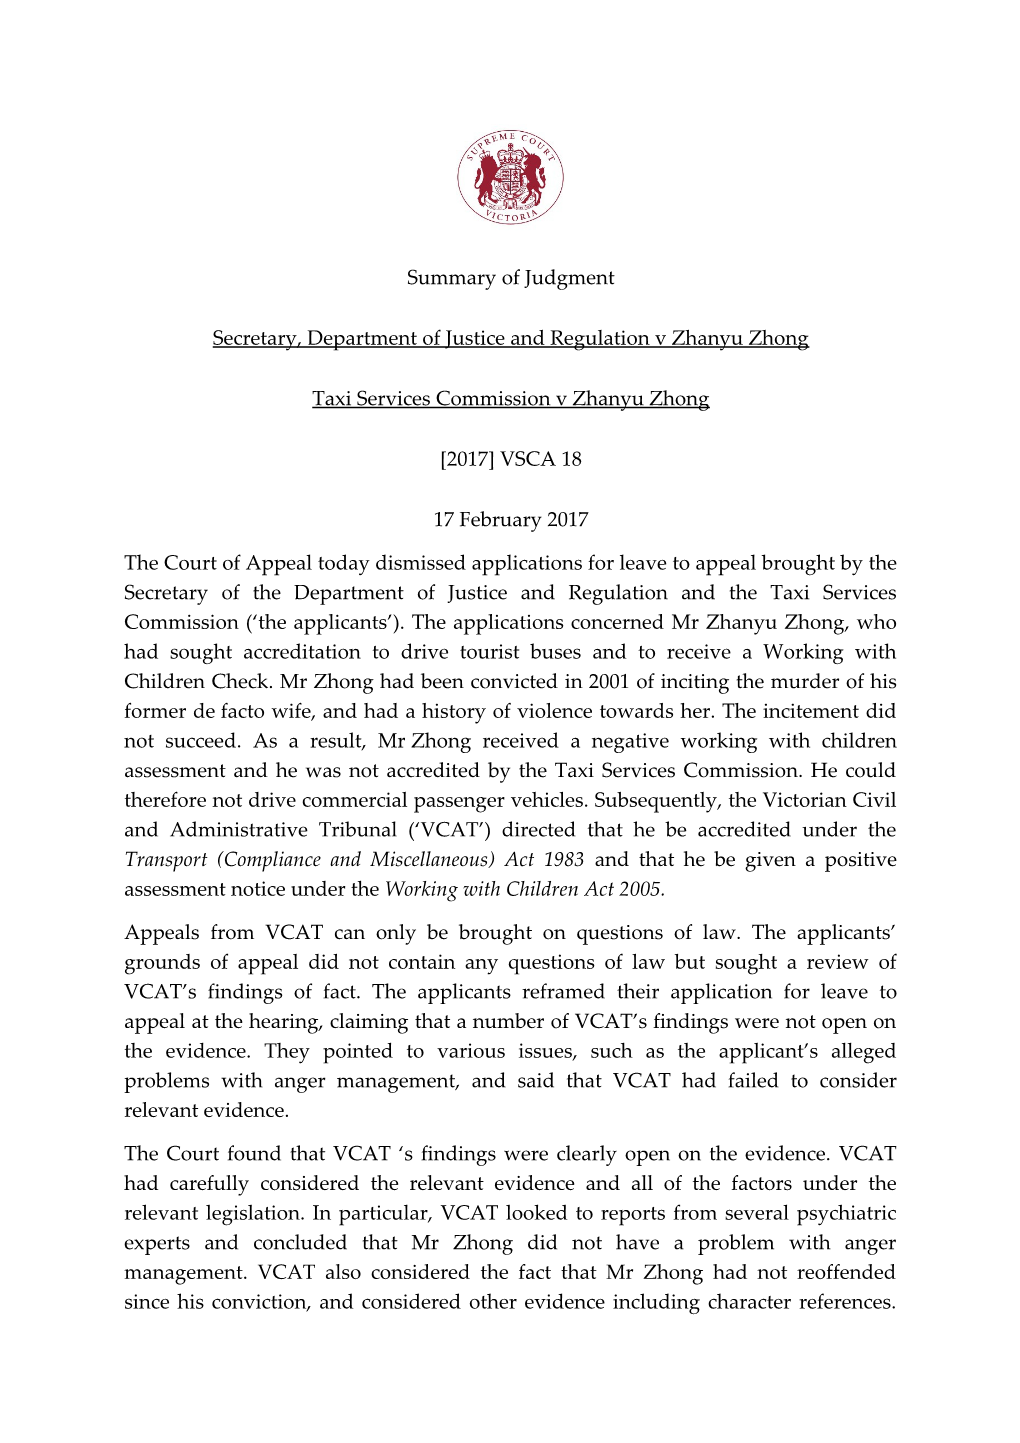 Secretary, Department of Justice and Regulation V Zhanyu Zhong